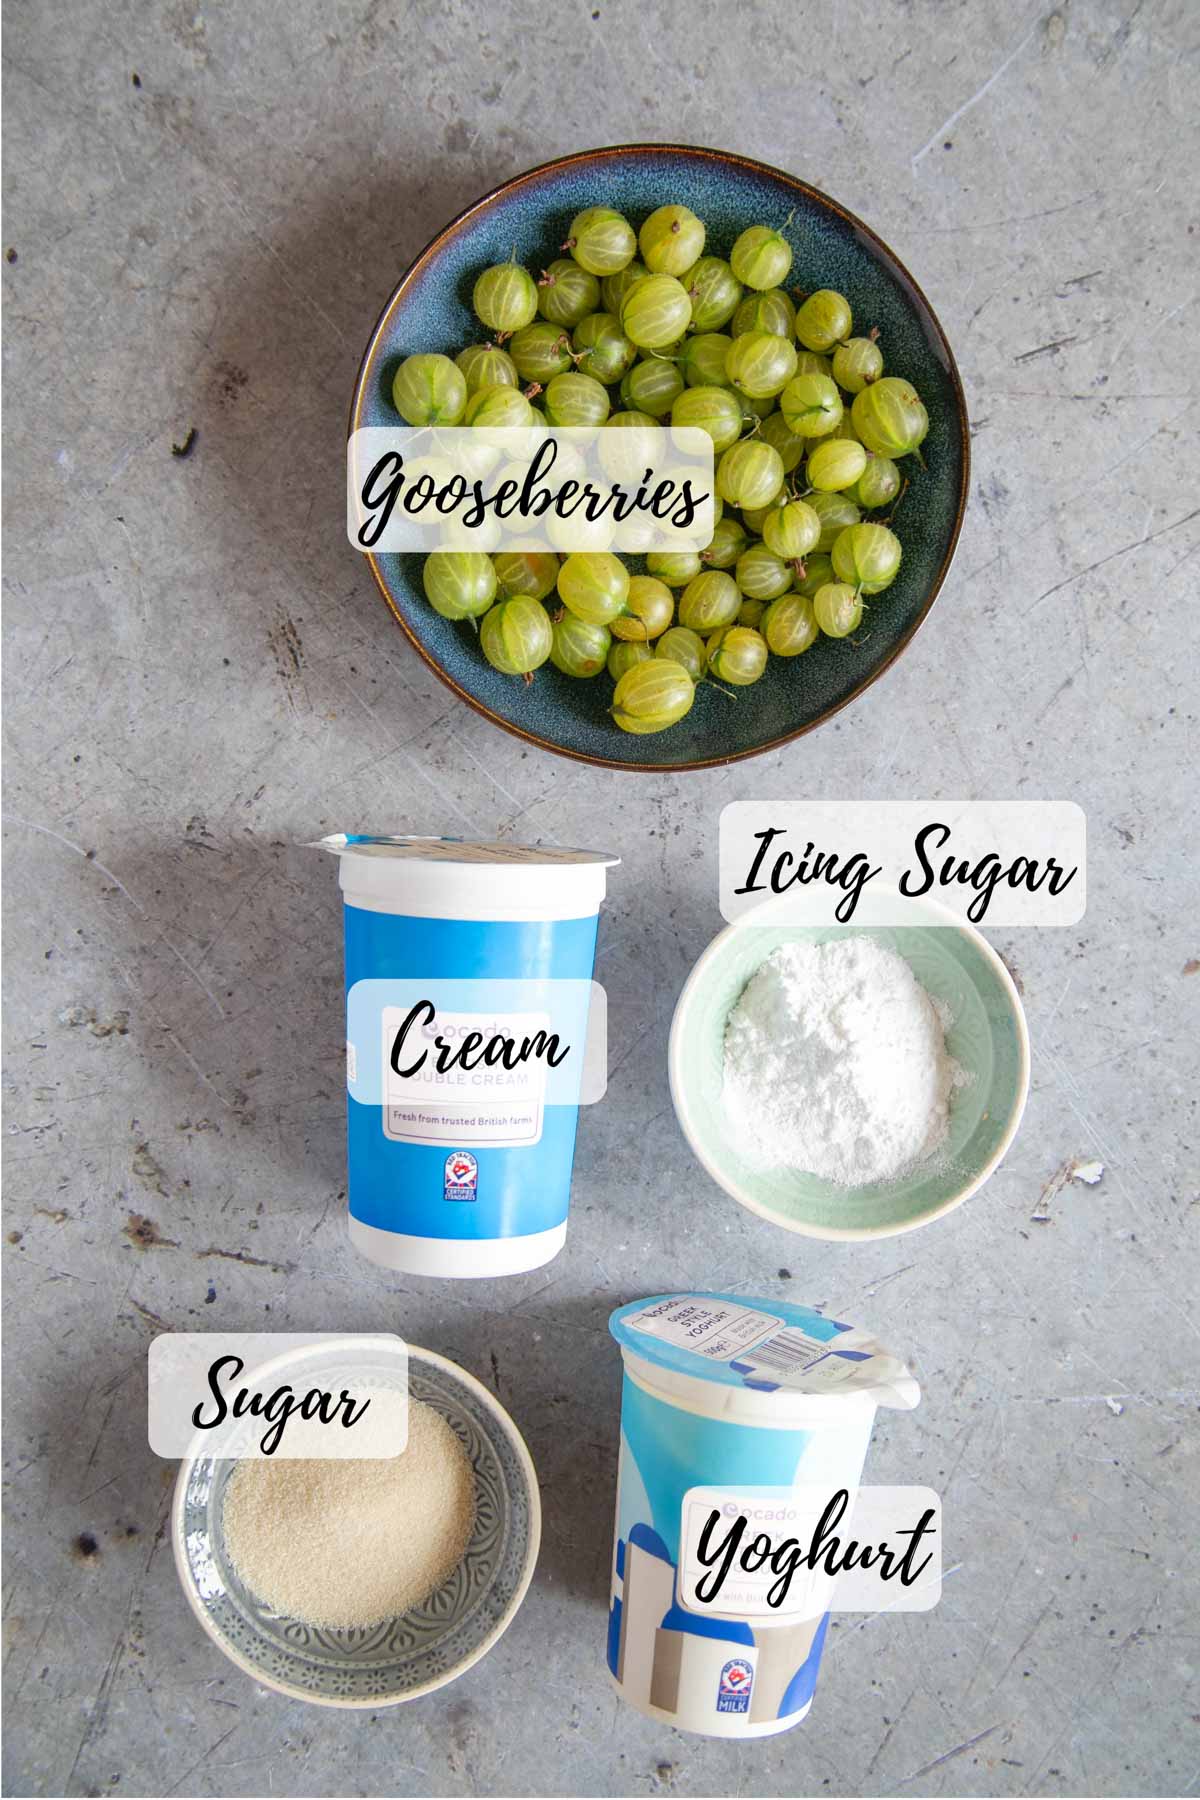 The ingredients: gooseberries, icing sugar, Greek yogurt, caster sugar, and cream.